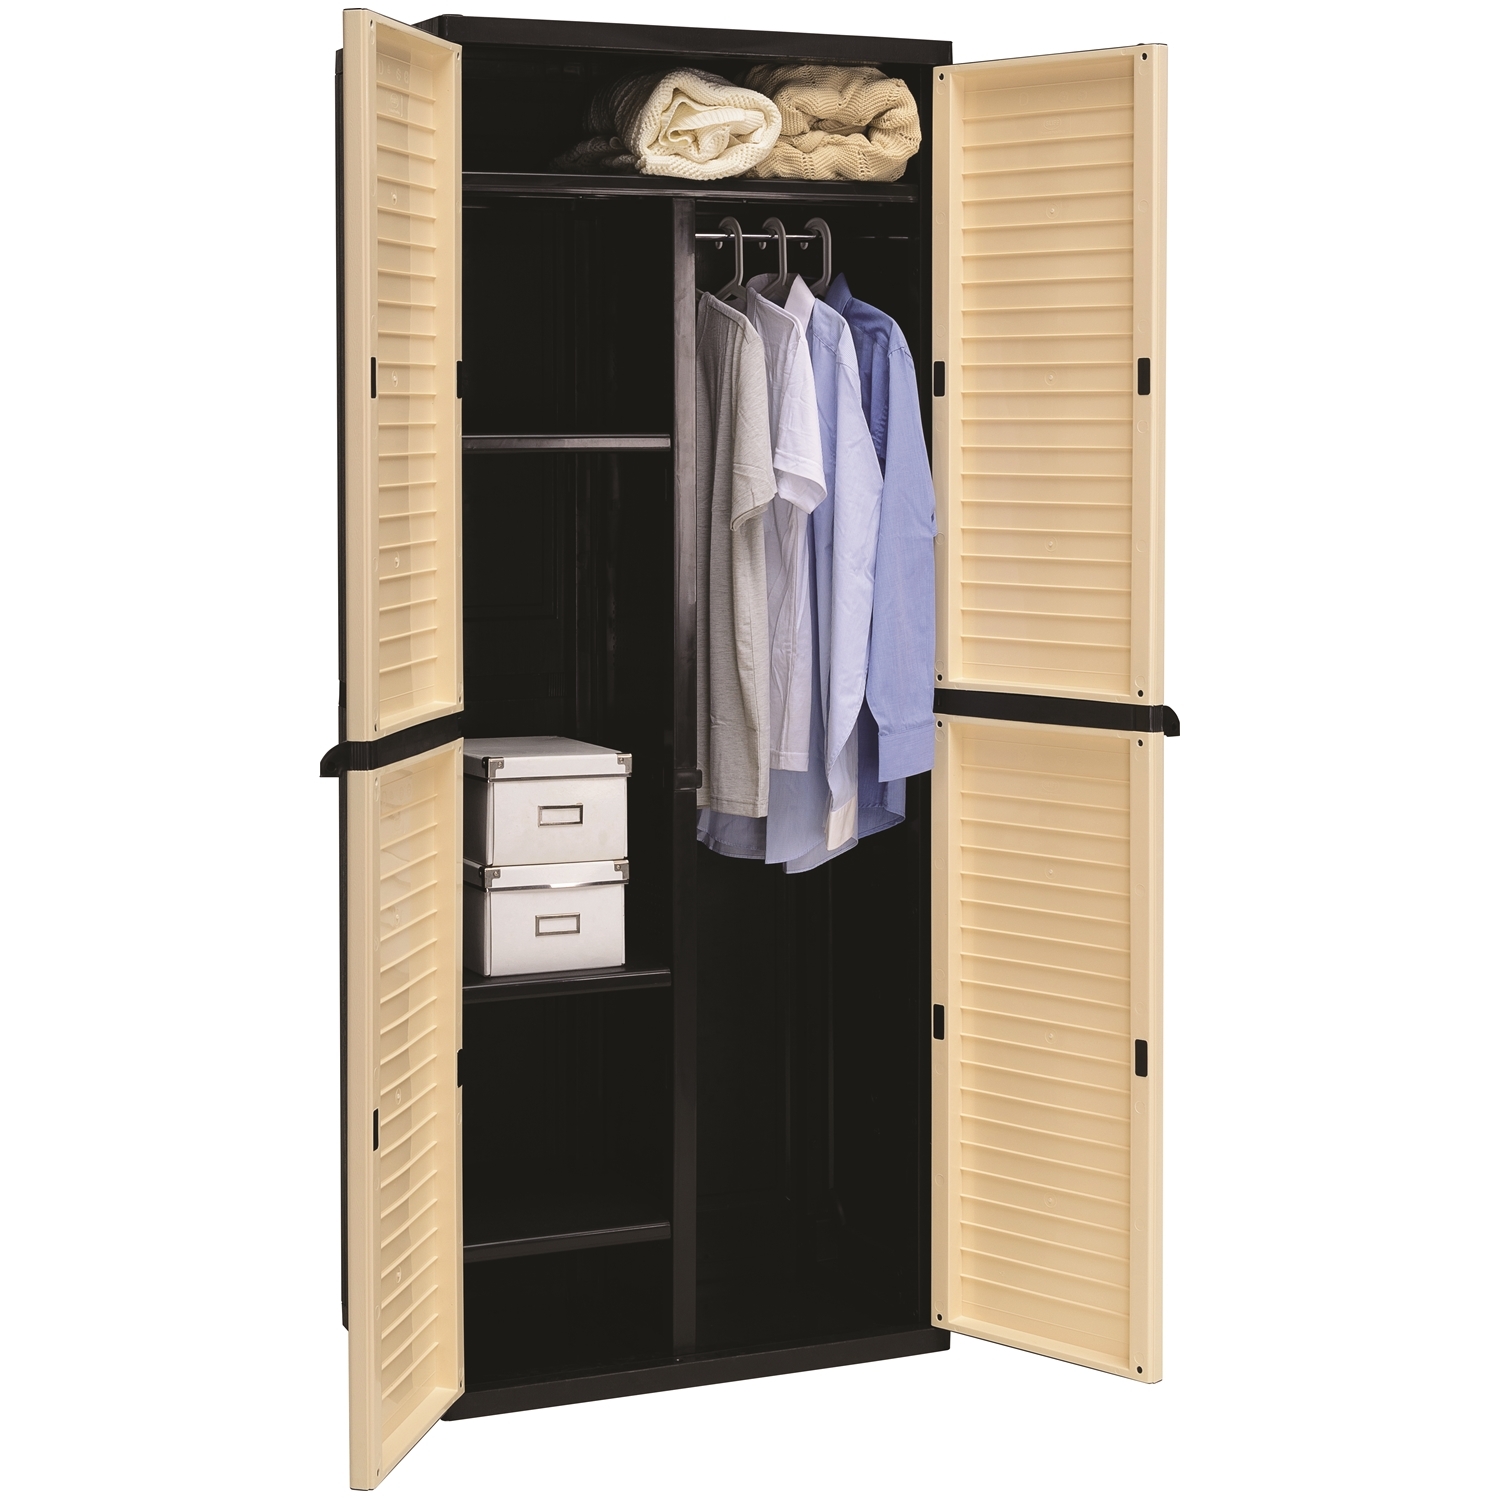 AIMIZON Qptomas Large Wardrobe with Shelf and Black colour body, Beige colour door